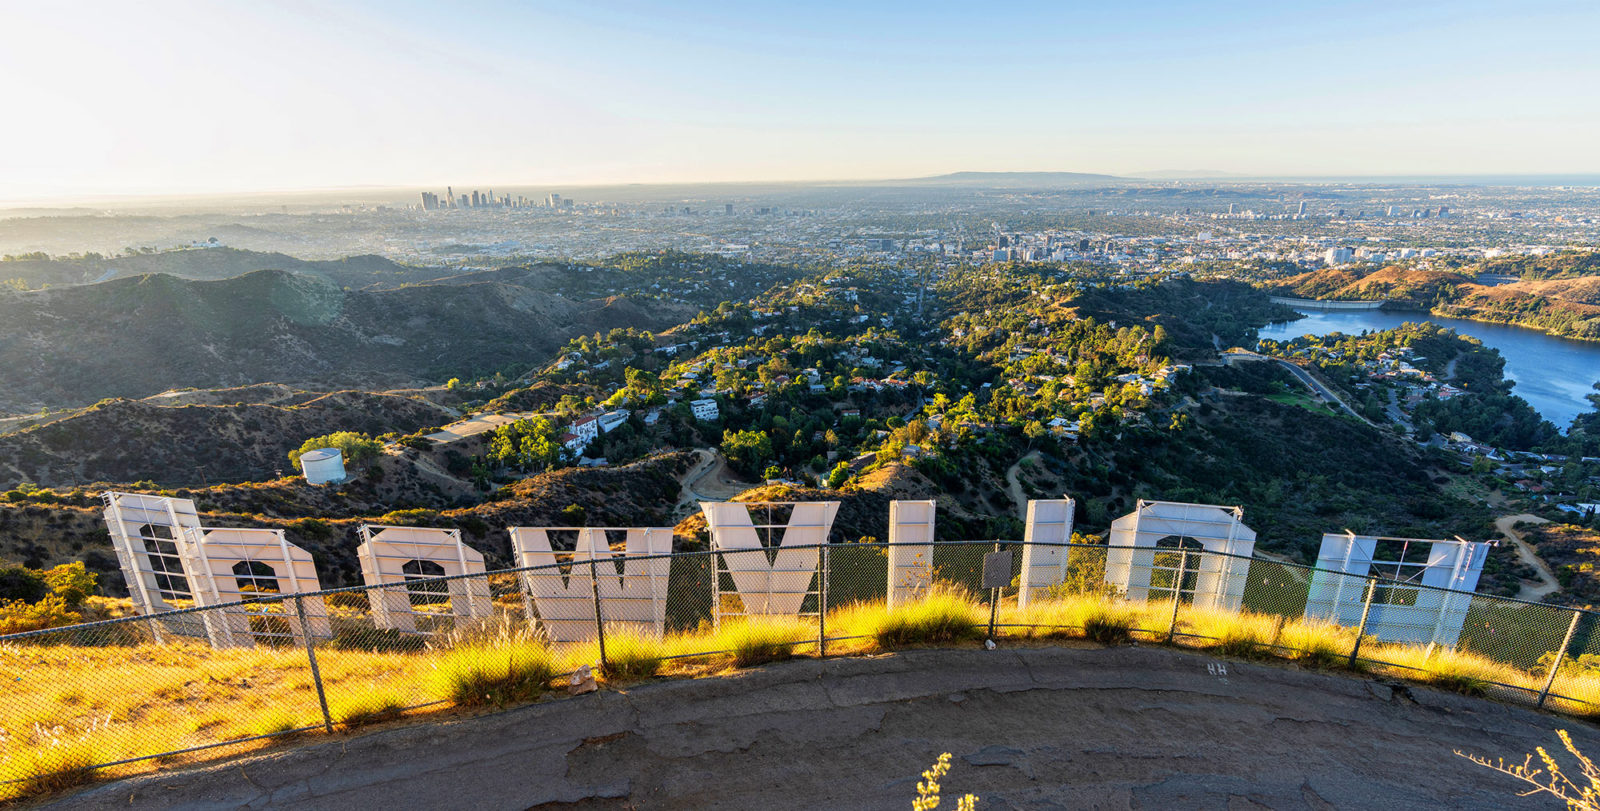 Panorama van Los Angeles van boven de beroemde Hollywood letters